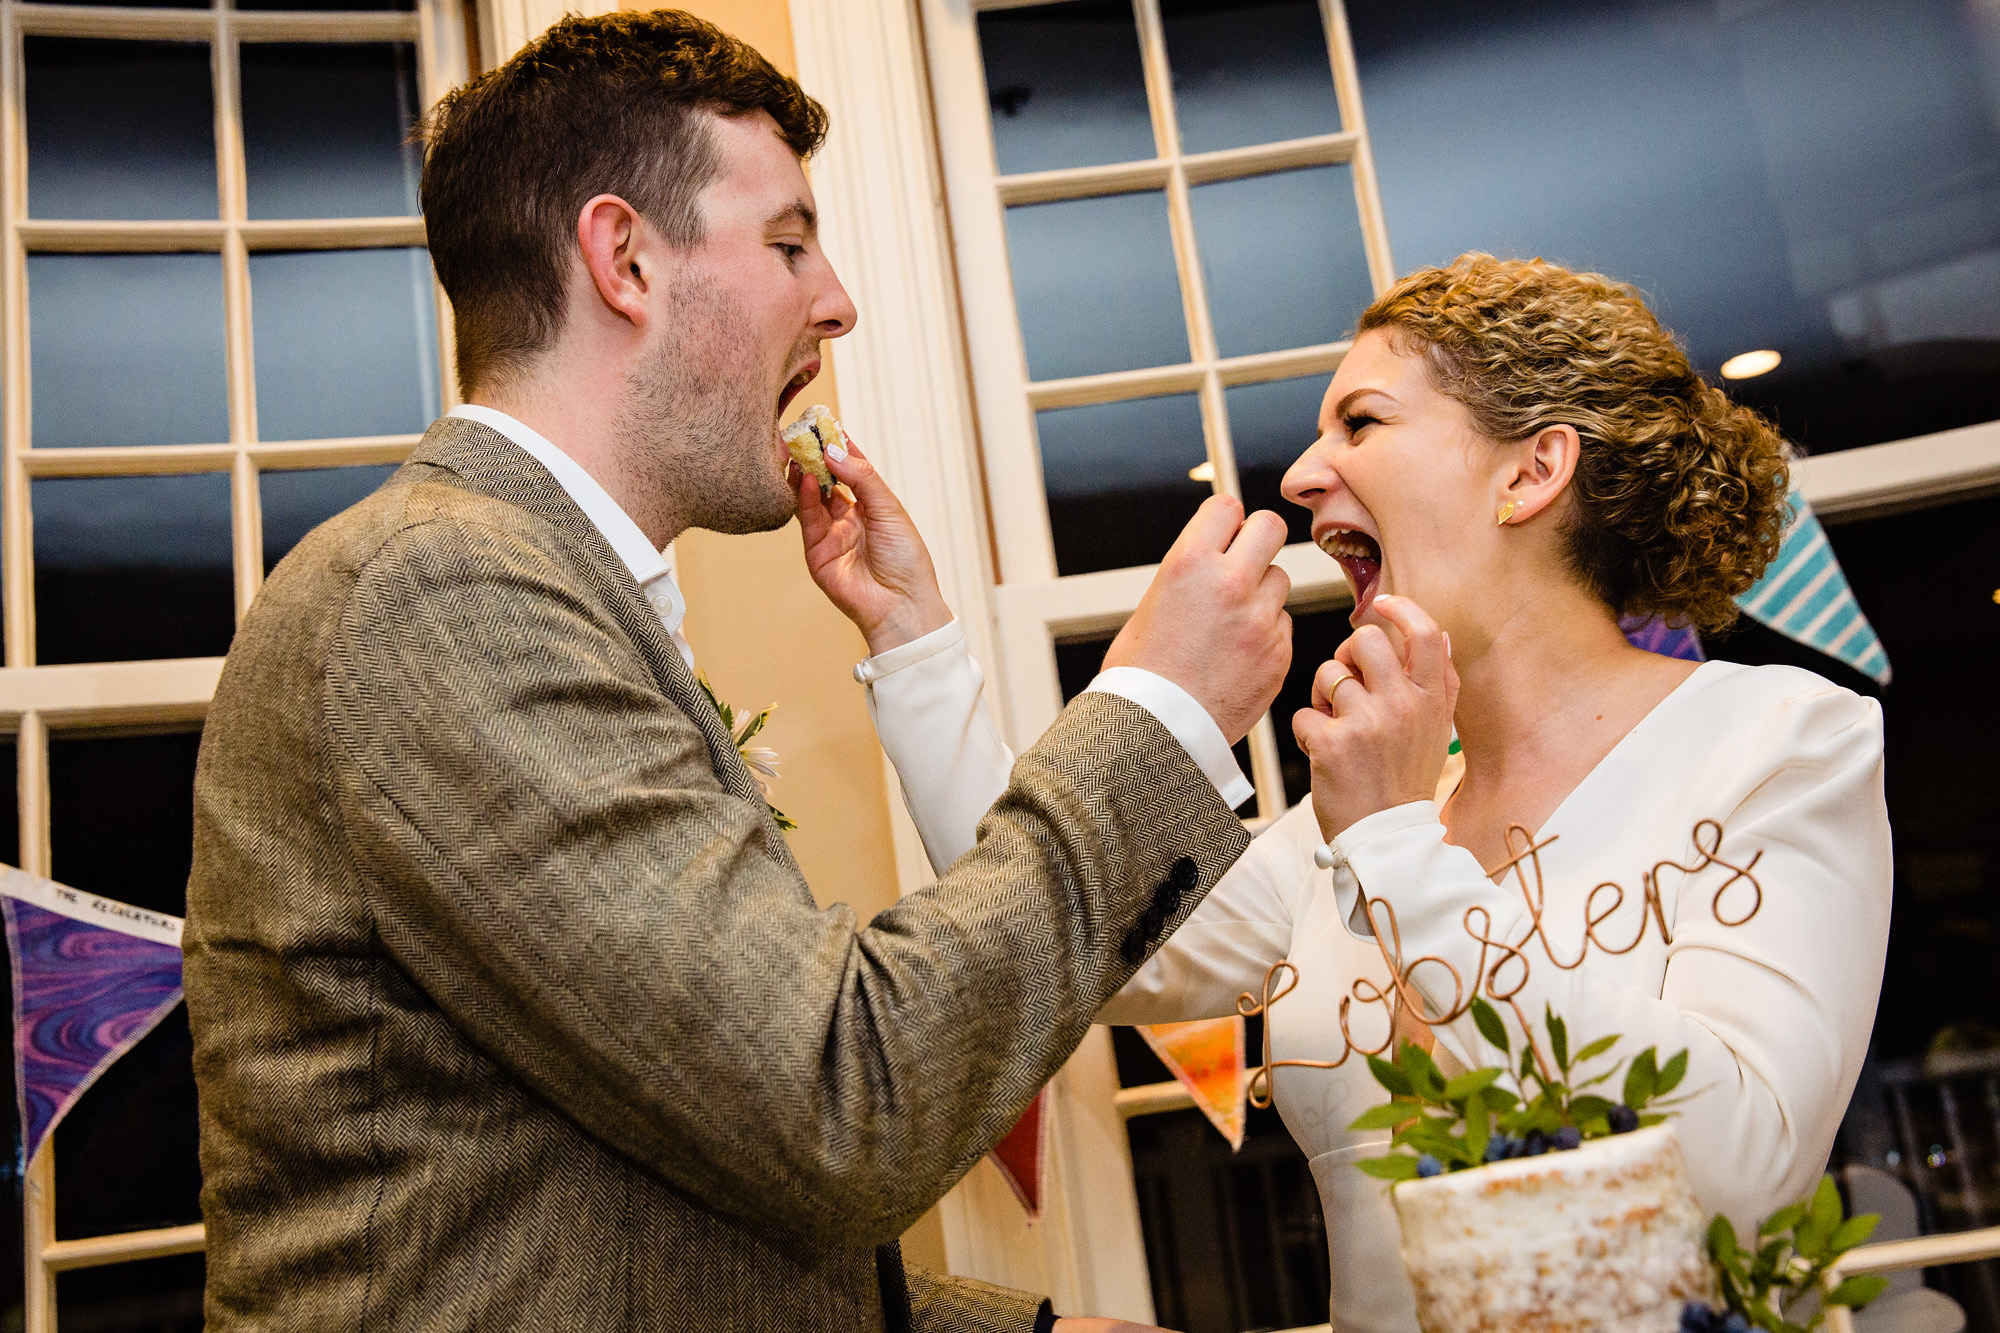 The bride and groom cut and eat their wedding cake at their Bar Harbor Inn wedding